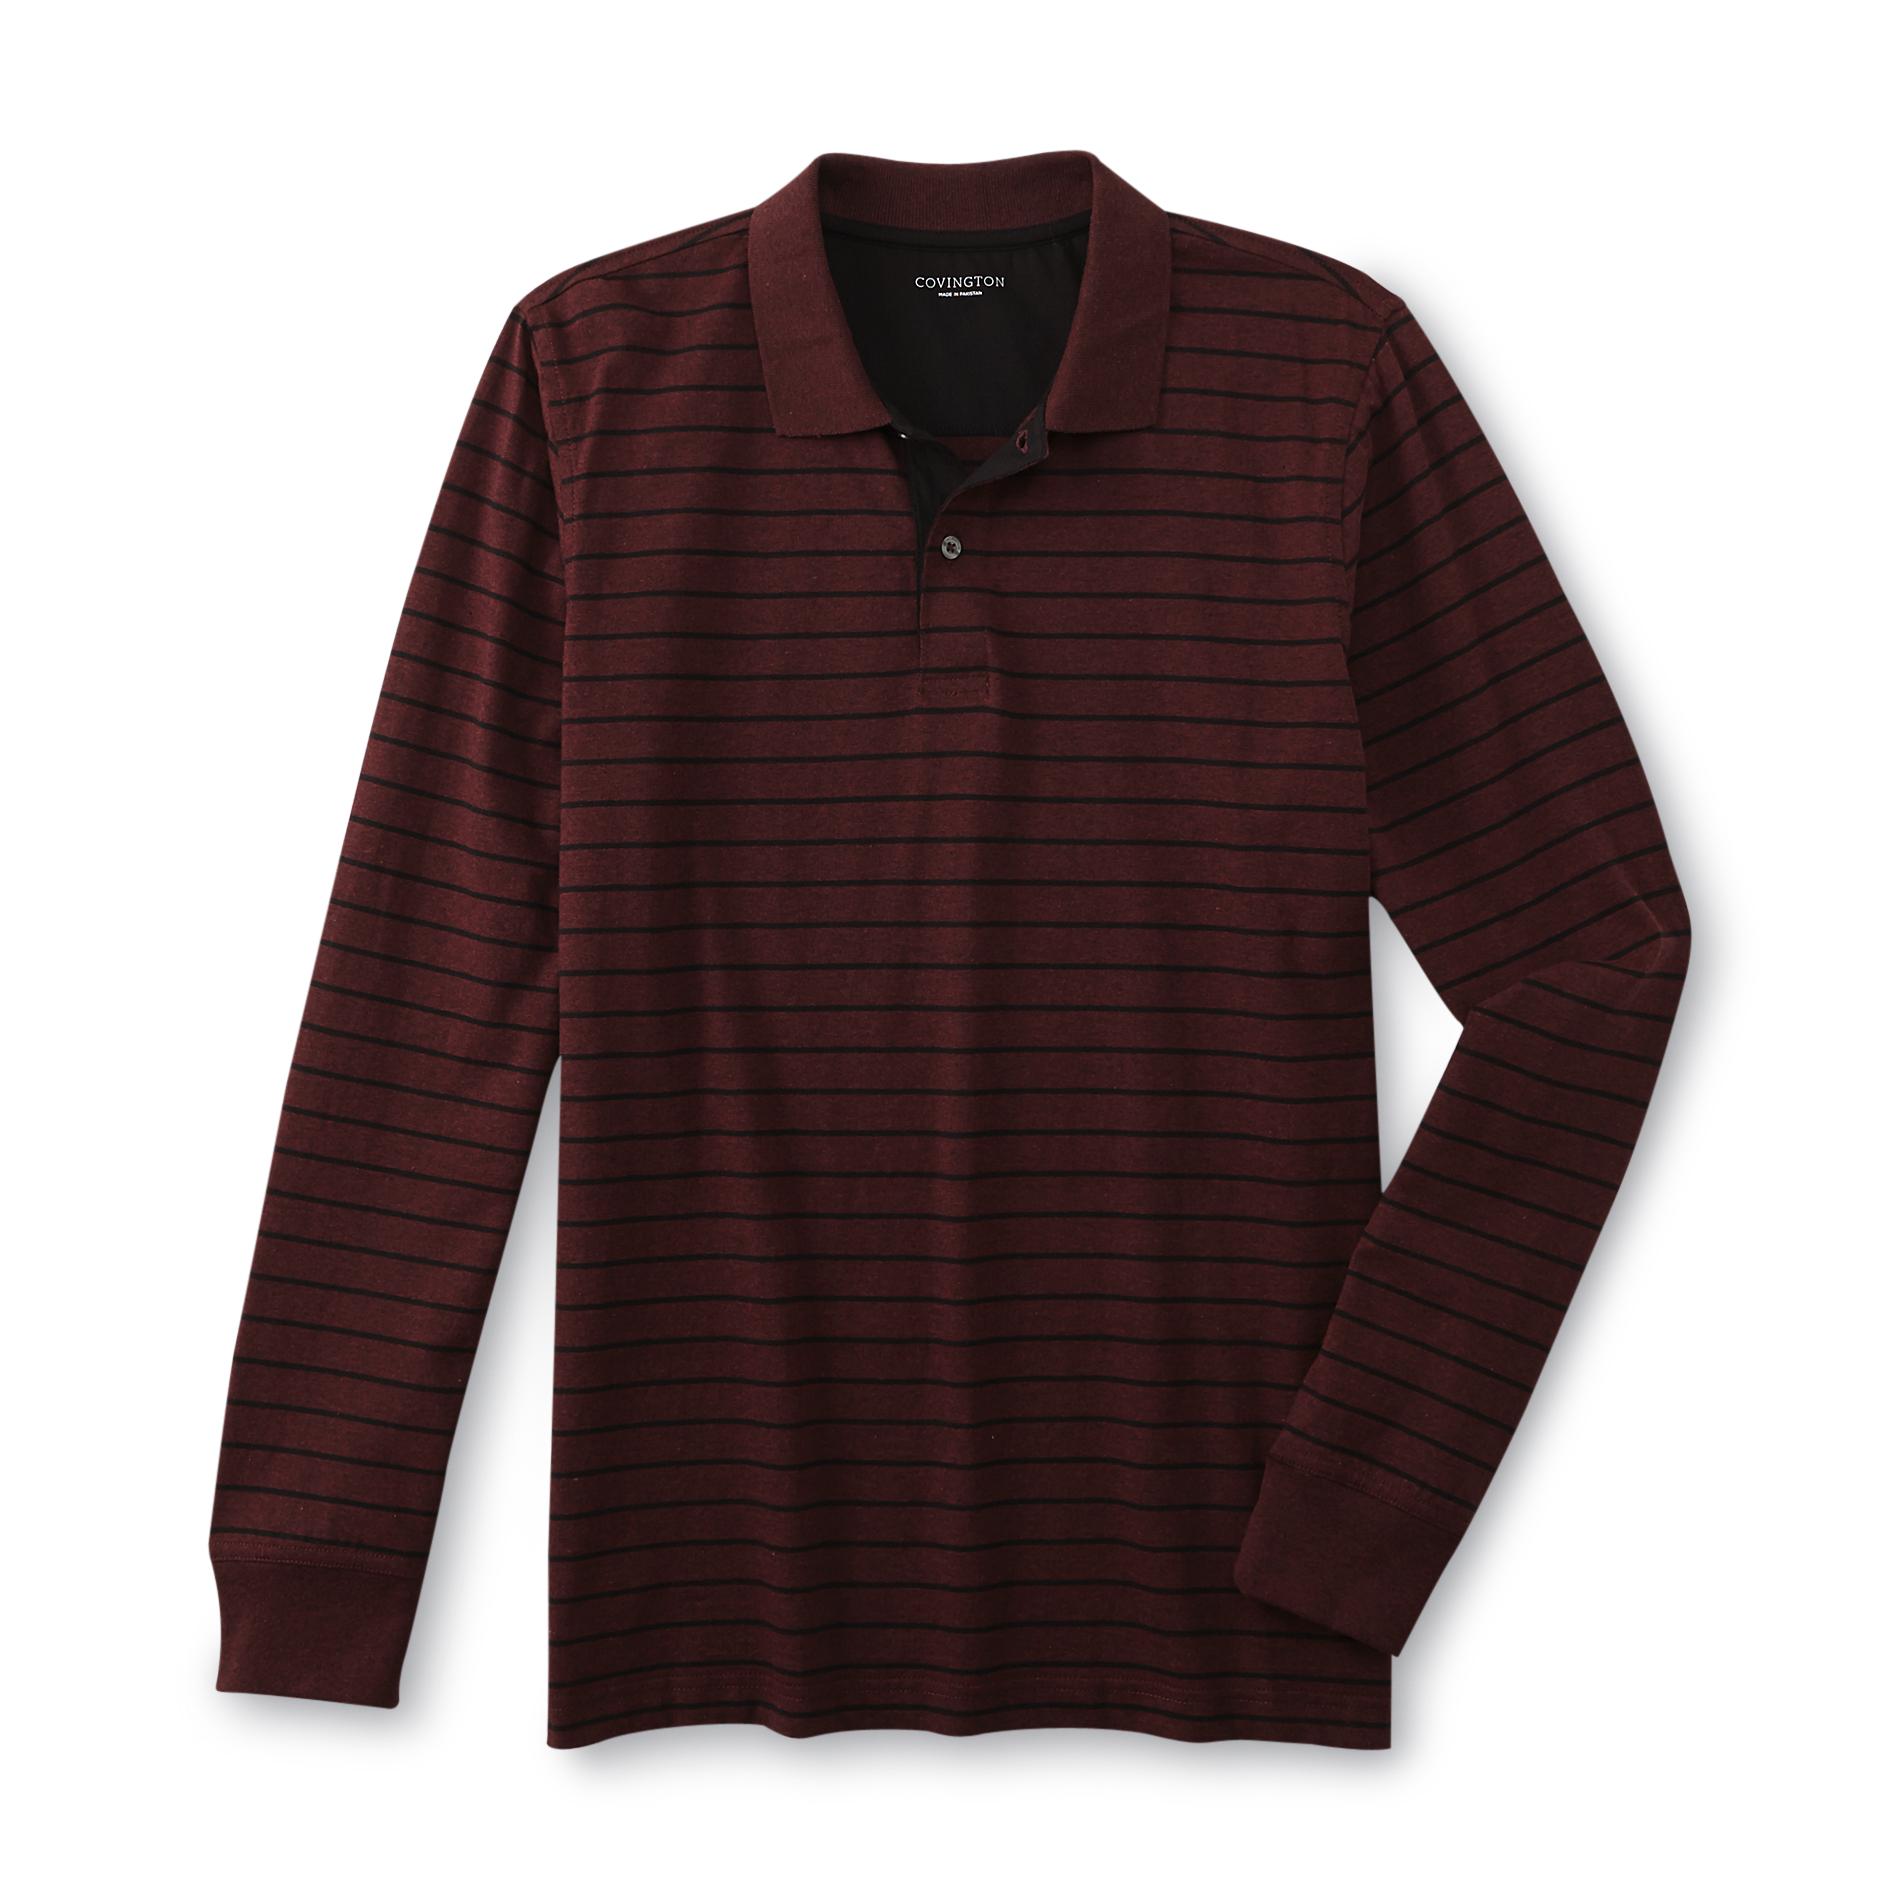 Covington Men's Polo Shirt - Striped